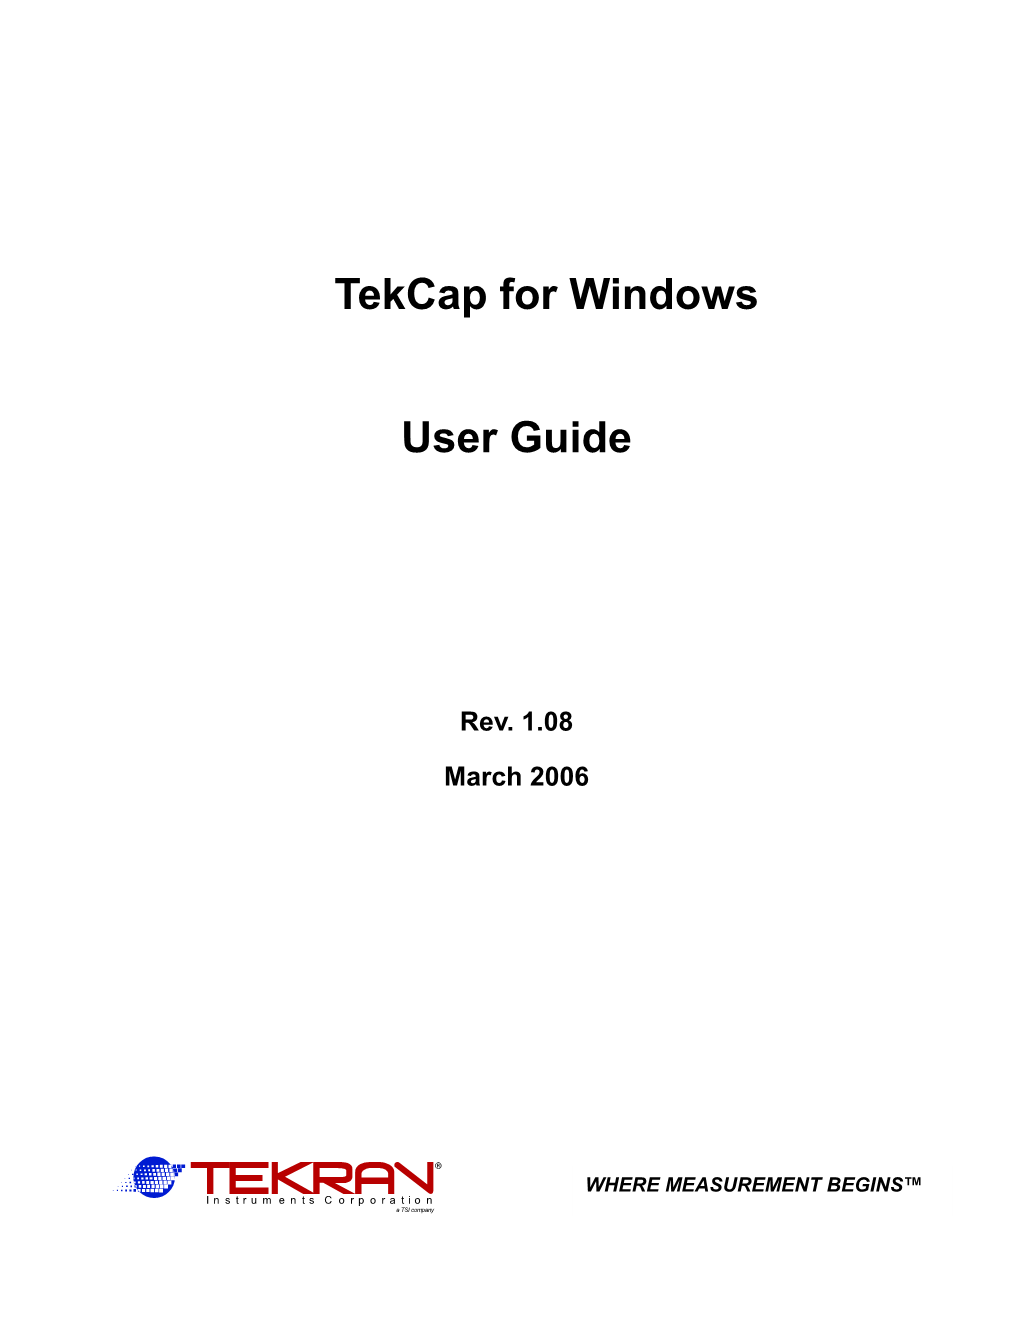 Tekcap Users Manual Rev 1.08